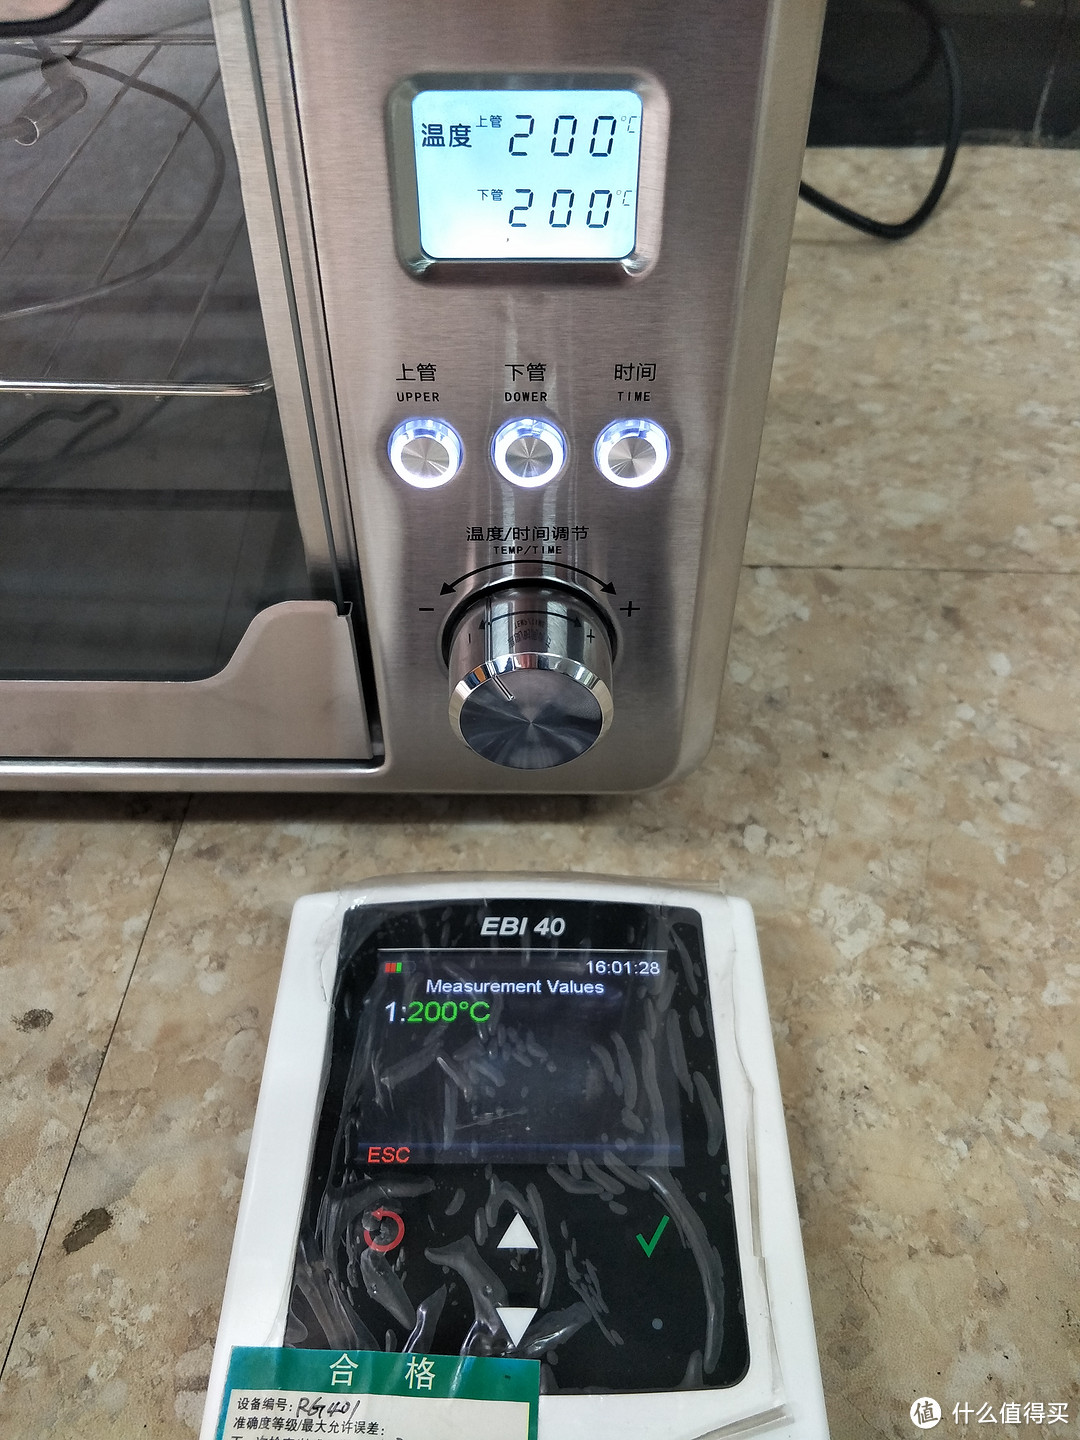 Donlim 东菱 DL-K25H电烤箱简单评测